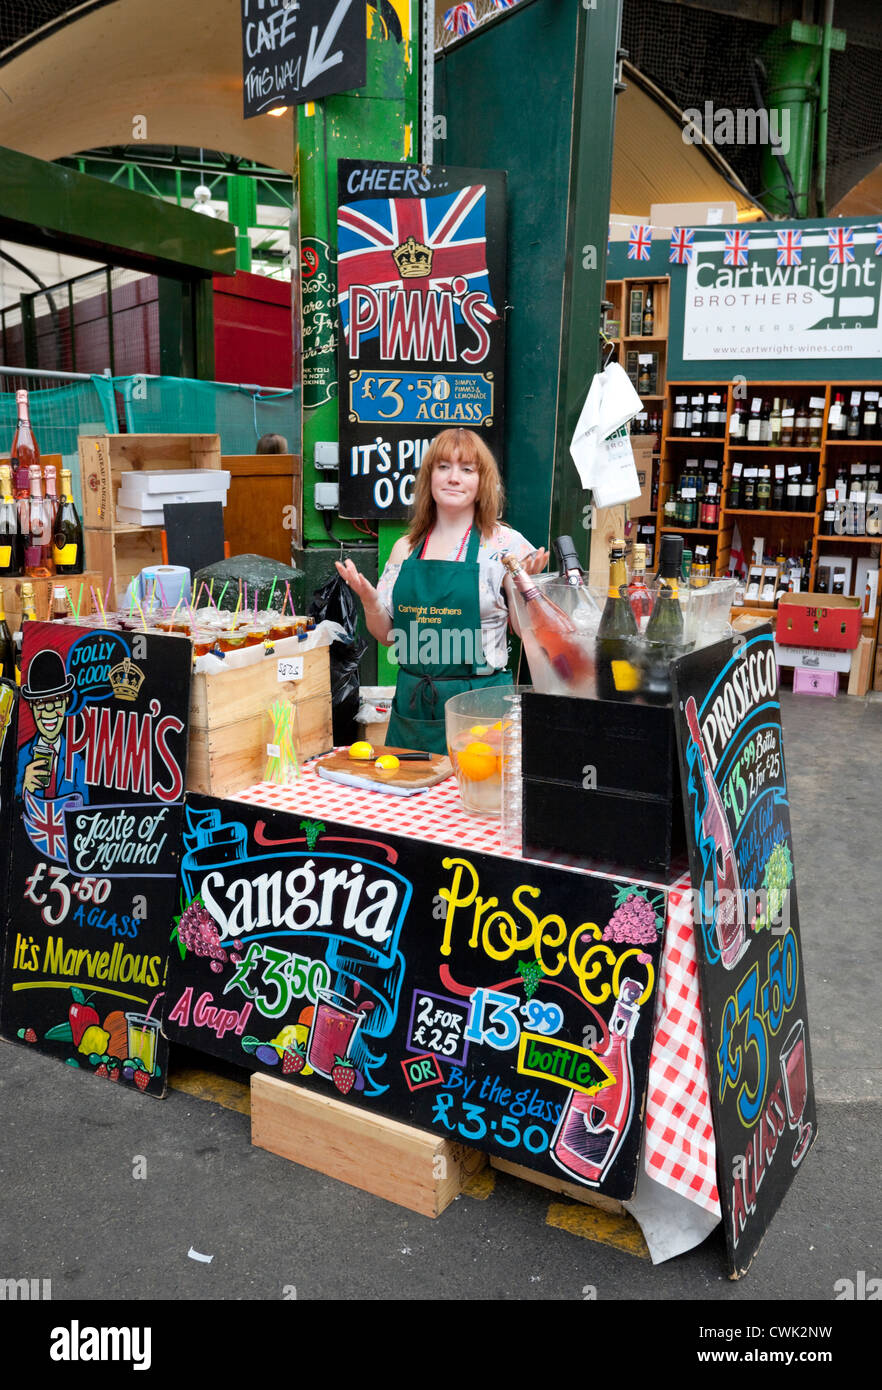 Beber alcohol cala, Borough Market, Londres, Inglaterra, Reino Unido. Foto de stock